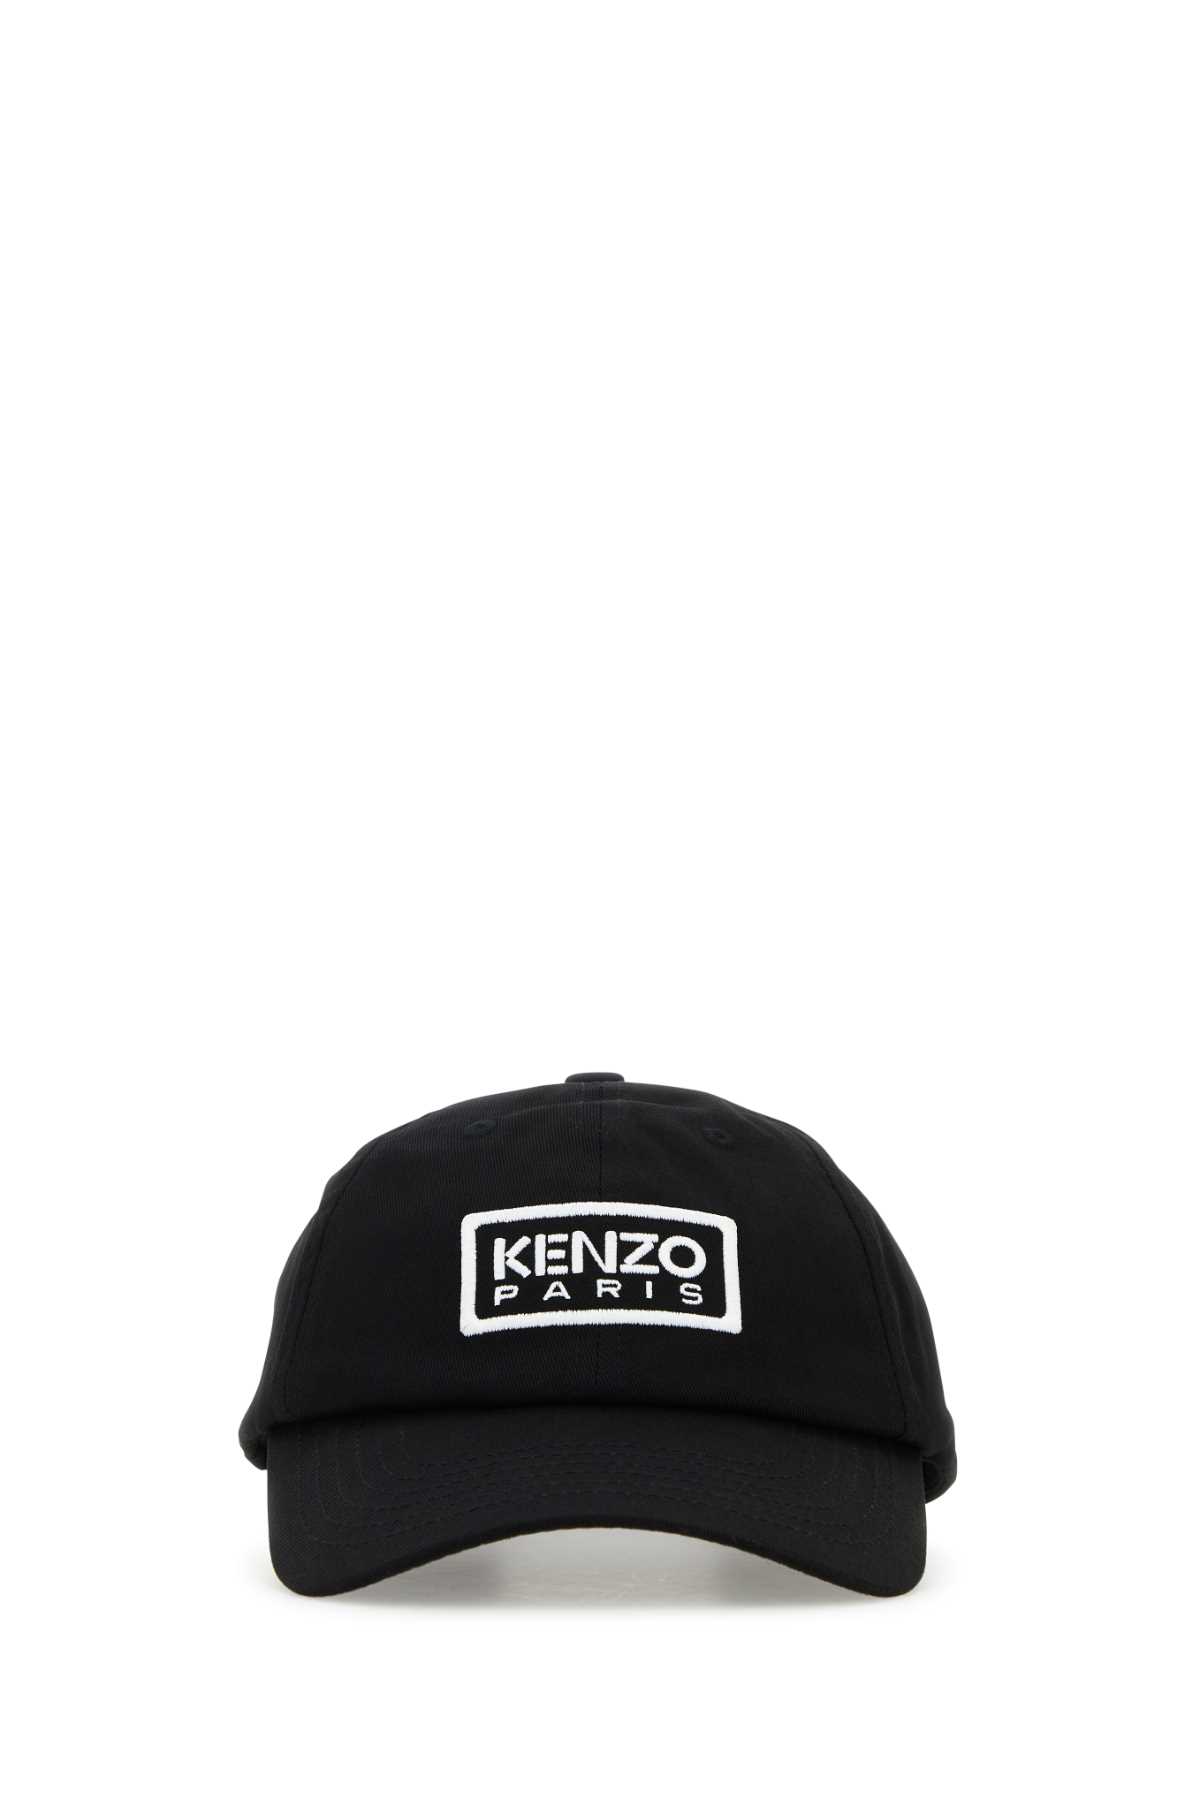 Kenzo Black Cotton Baseball Cap